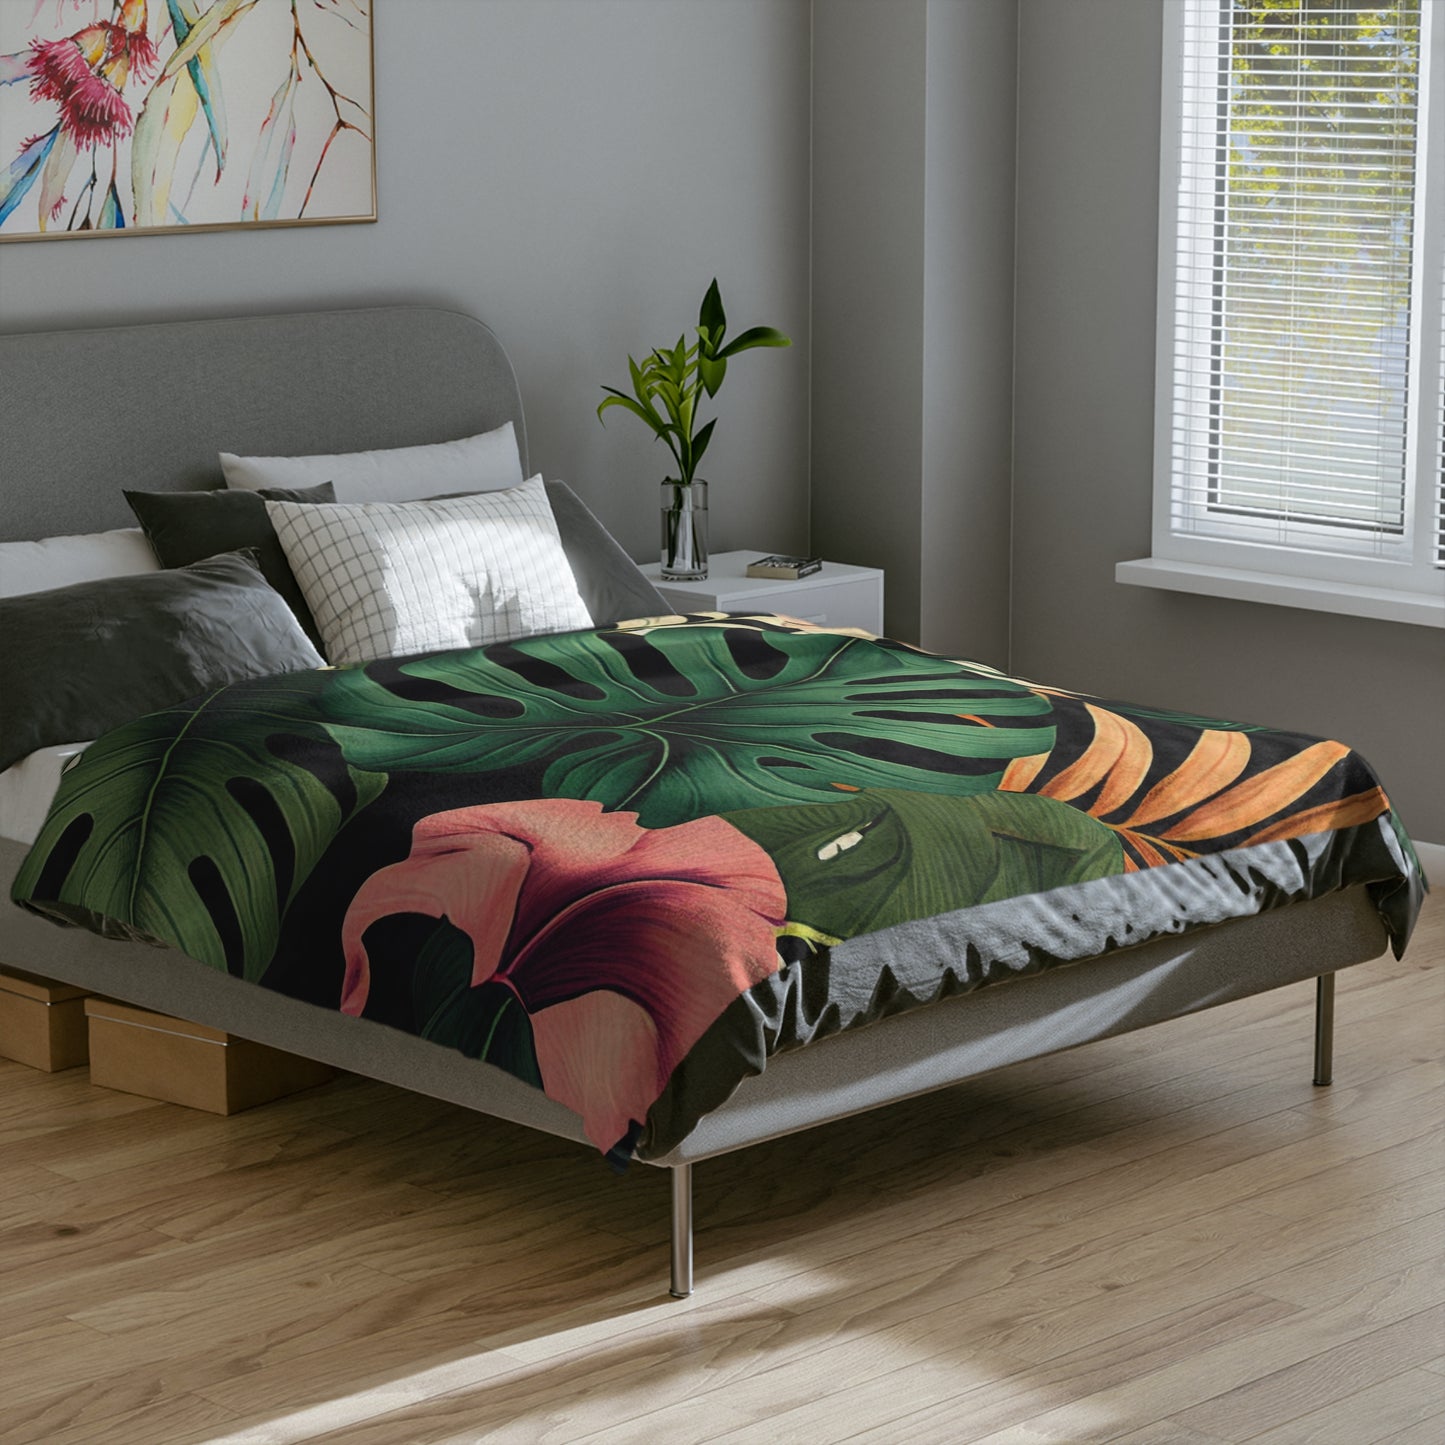 Terrific Tropical Monstera Leaf Pattern Throw Sofa Bed Blanket  - Soft Thick Velveteen Minky Throw Blanket